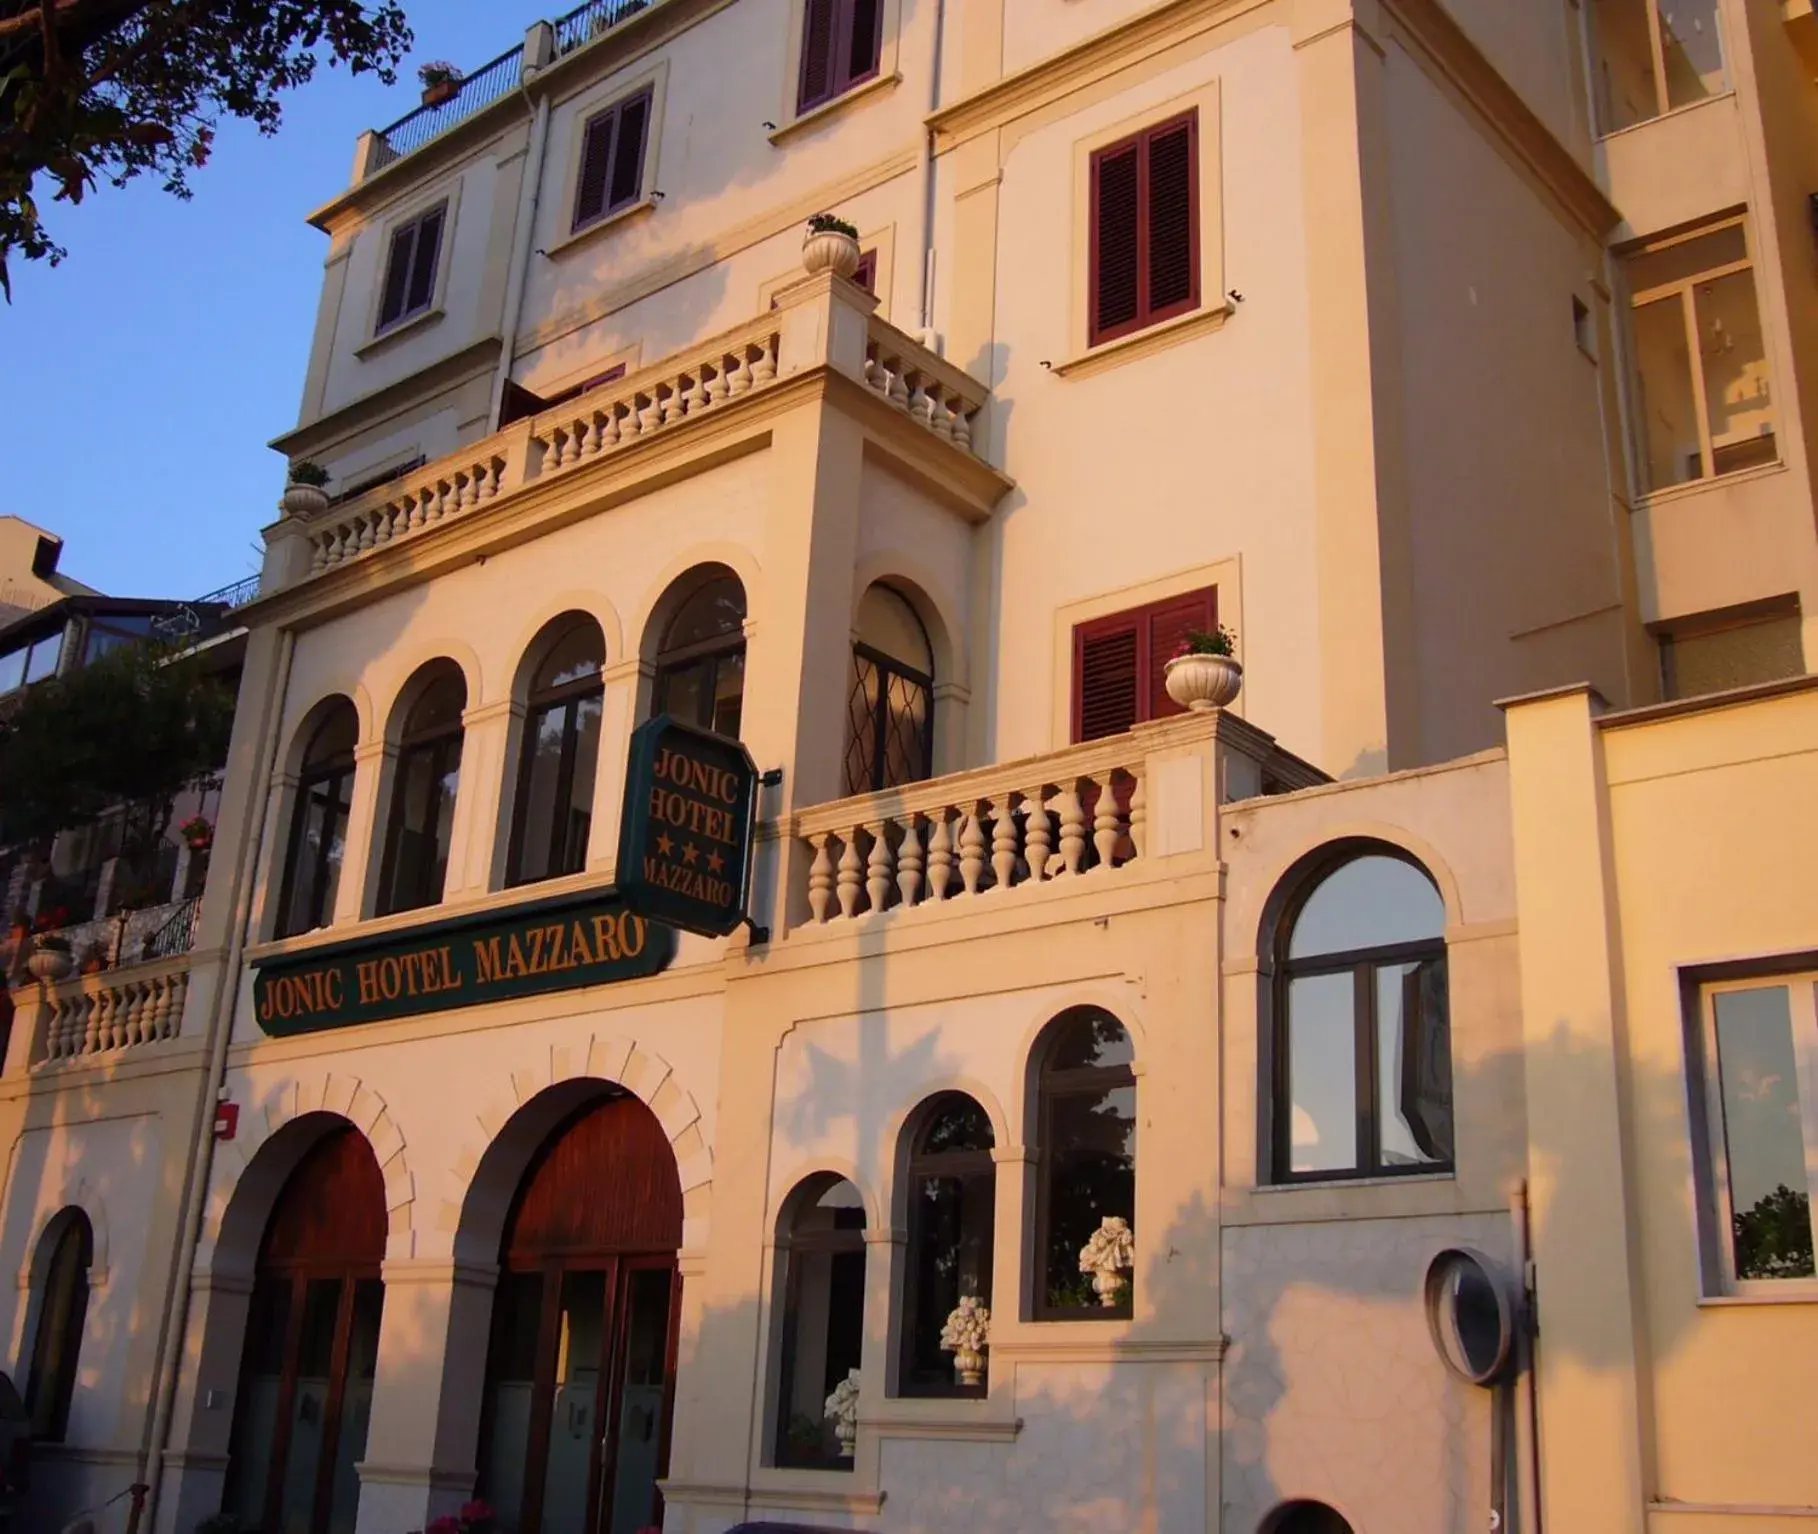 Facade/entrance, Property Building in Jonic Hotel Mazzarò